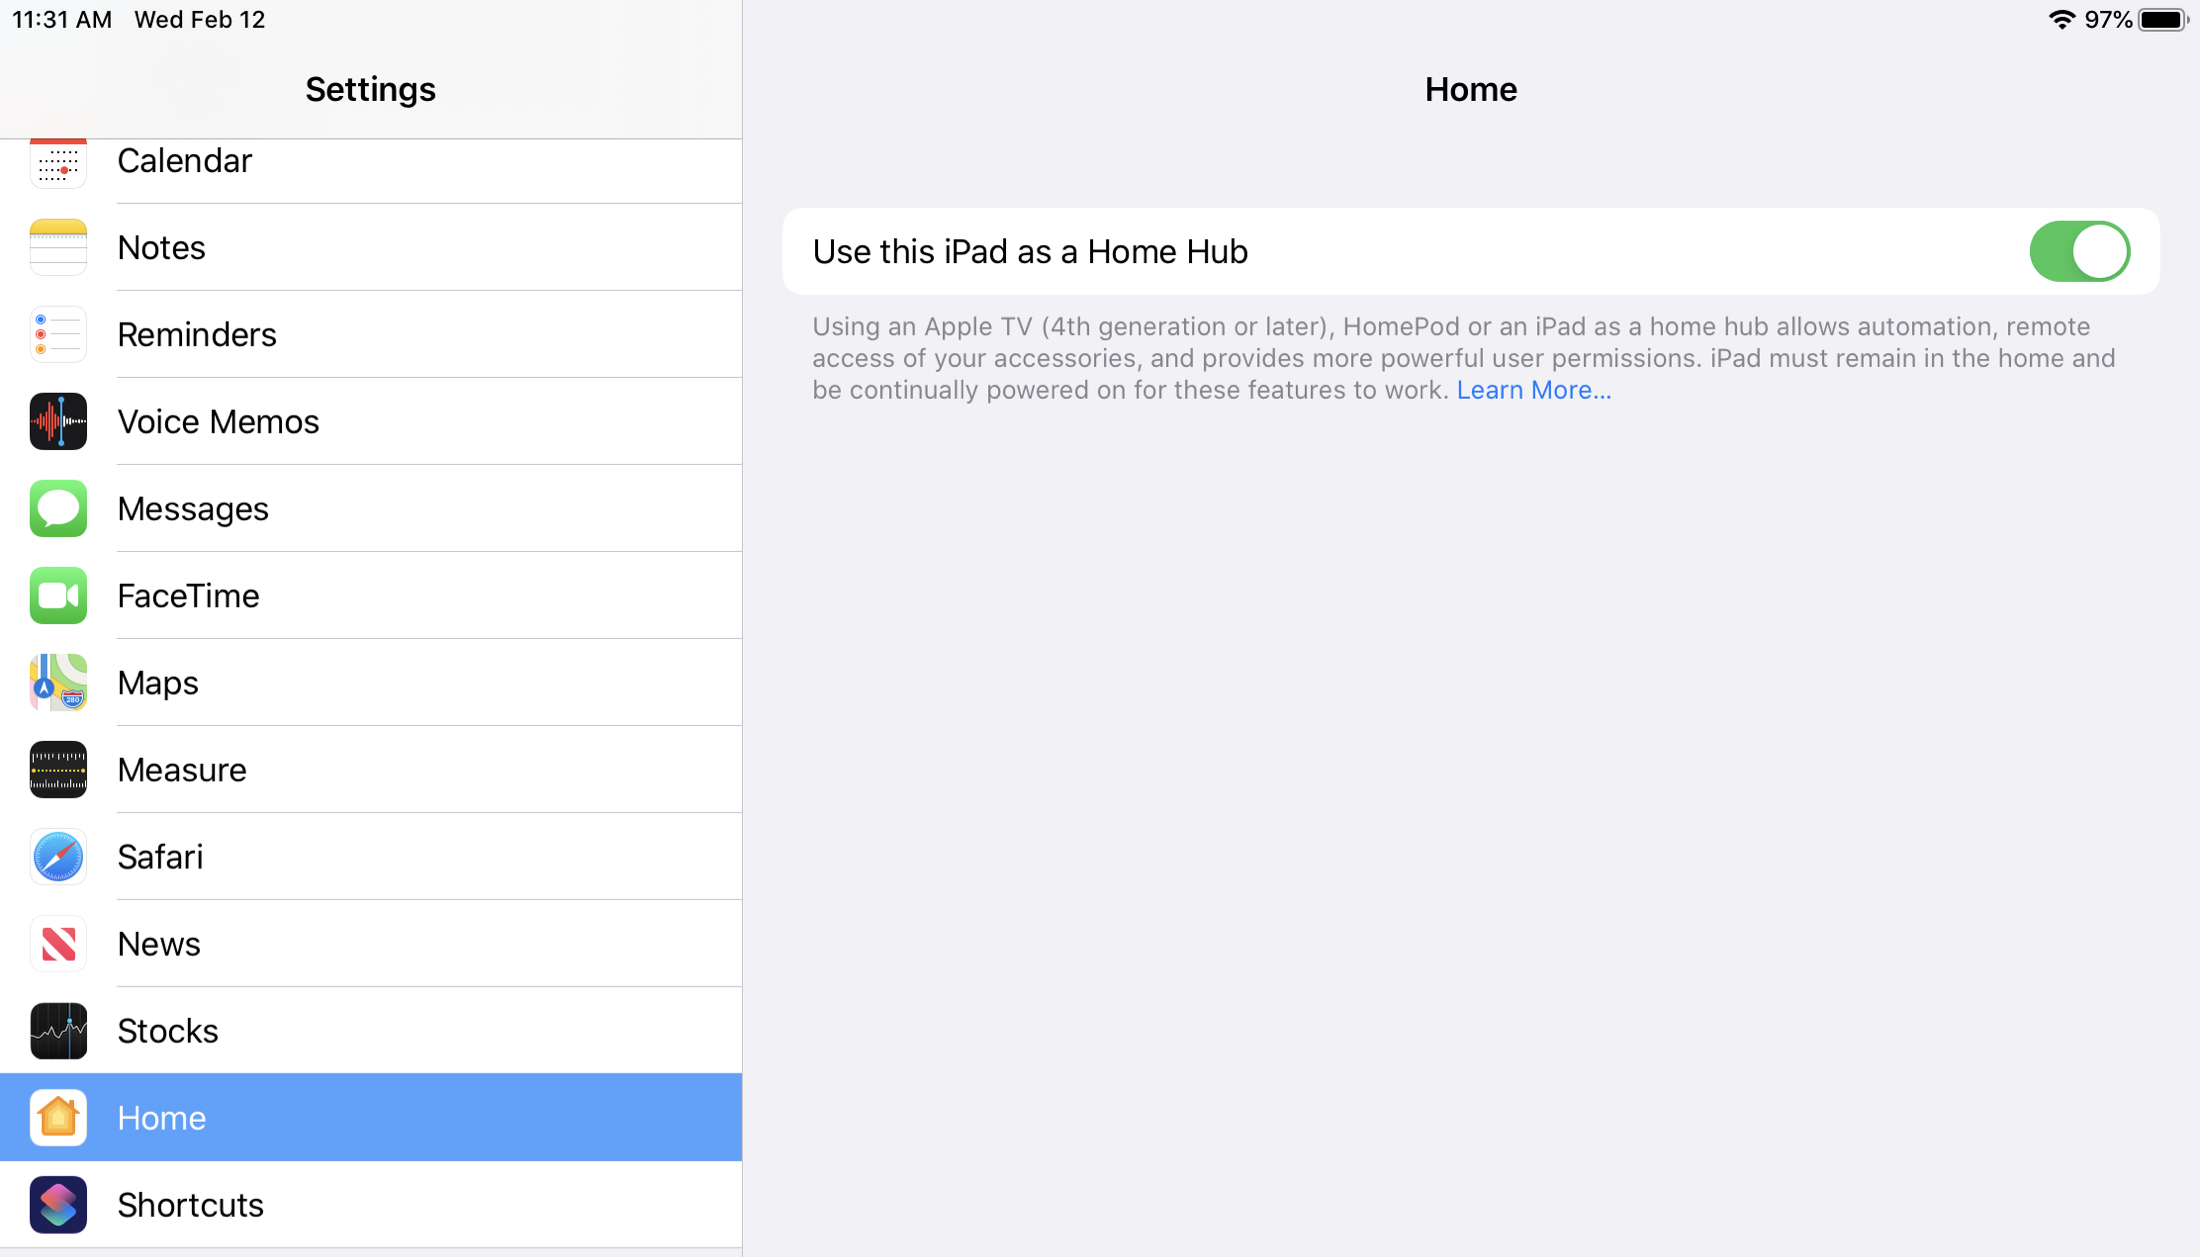 iPad as Home Hub